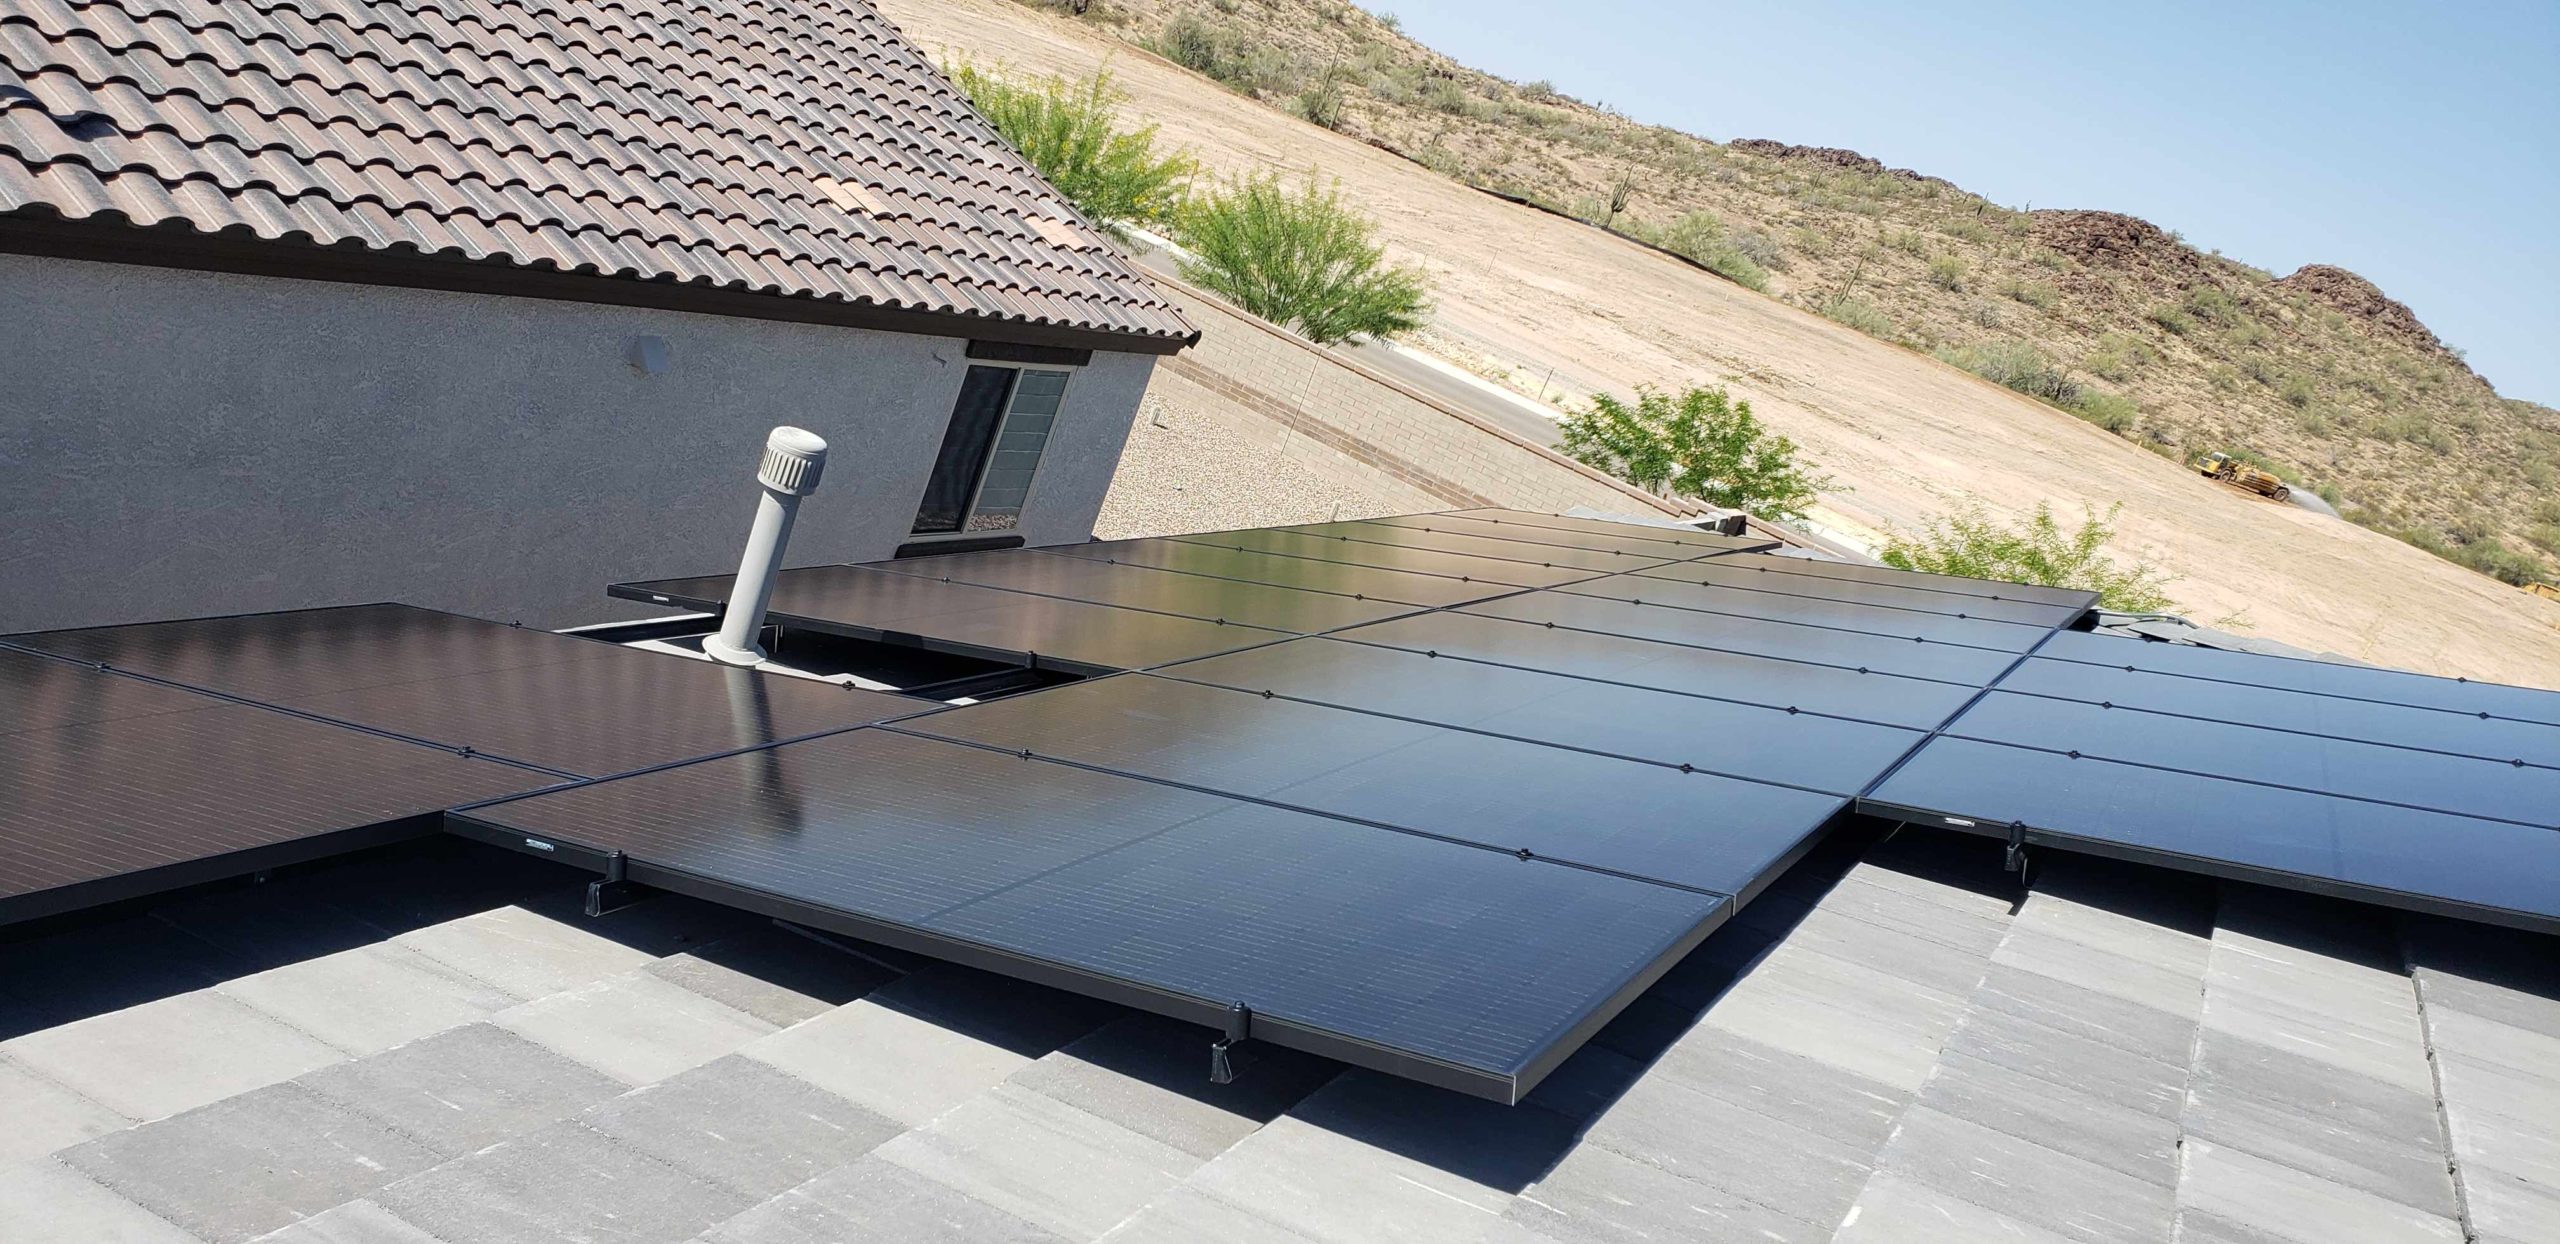 Rooftop Solar installation in Phoenix, Arizona with Desert in background.